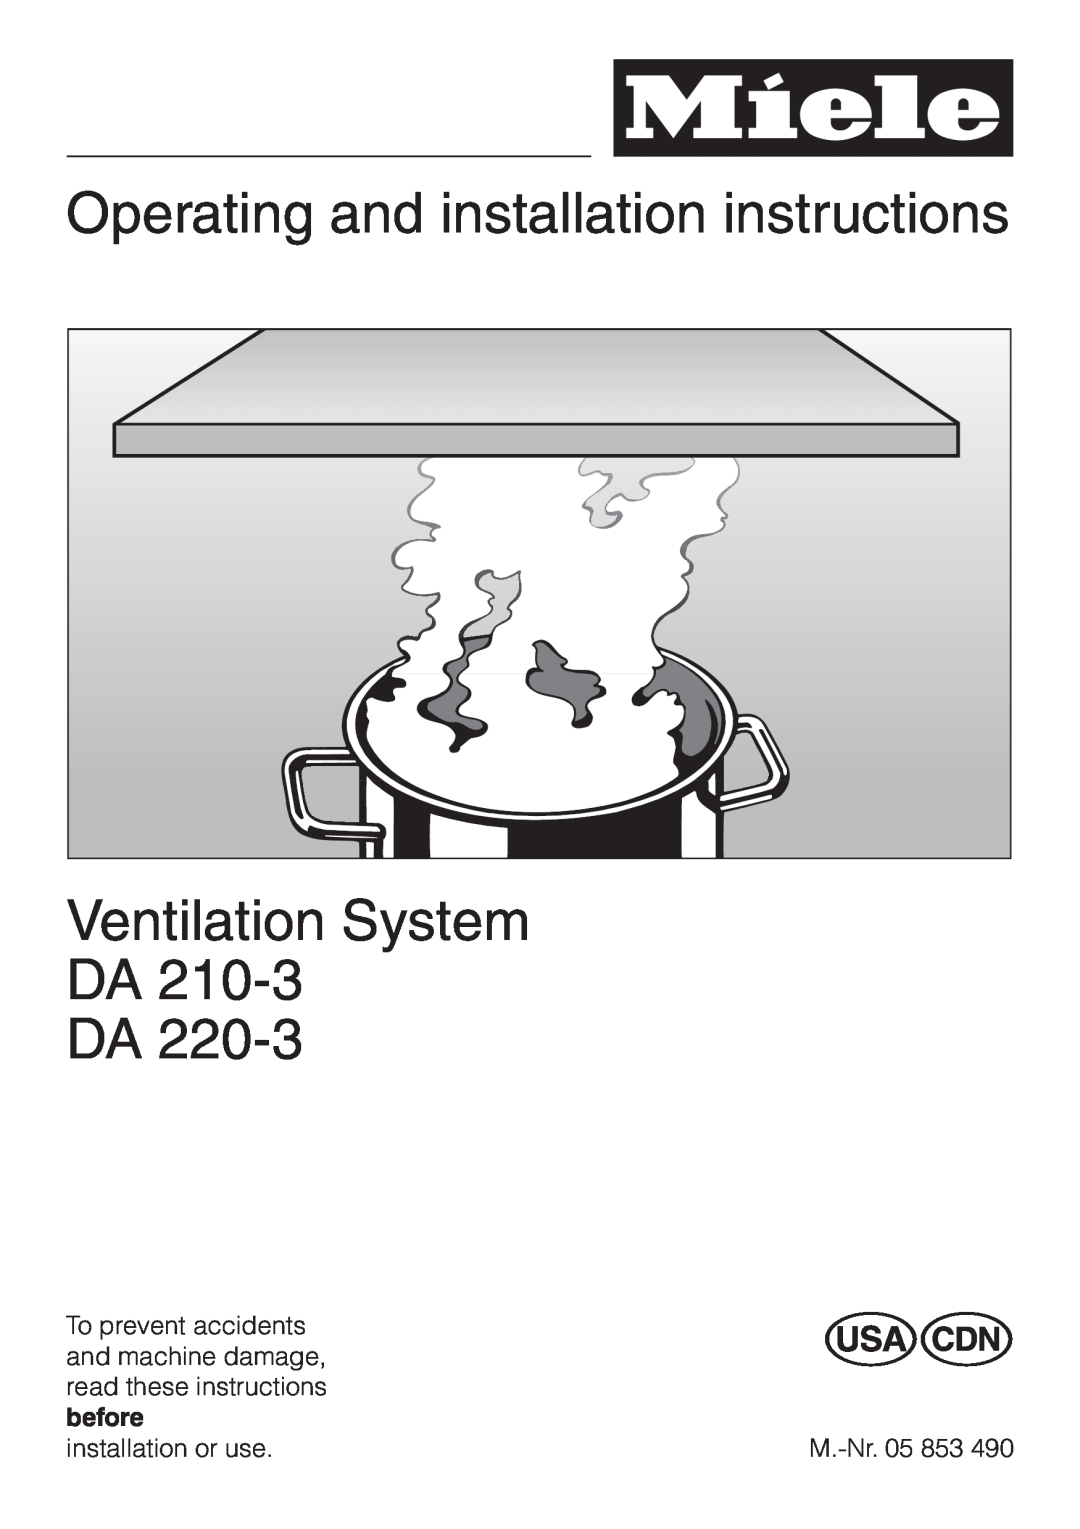 Miele DA210-3 installation instructions Operating and installation instructions, Ventilation System DA DA 